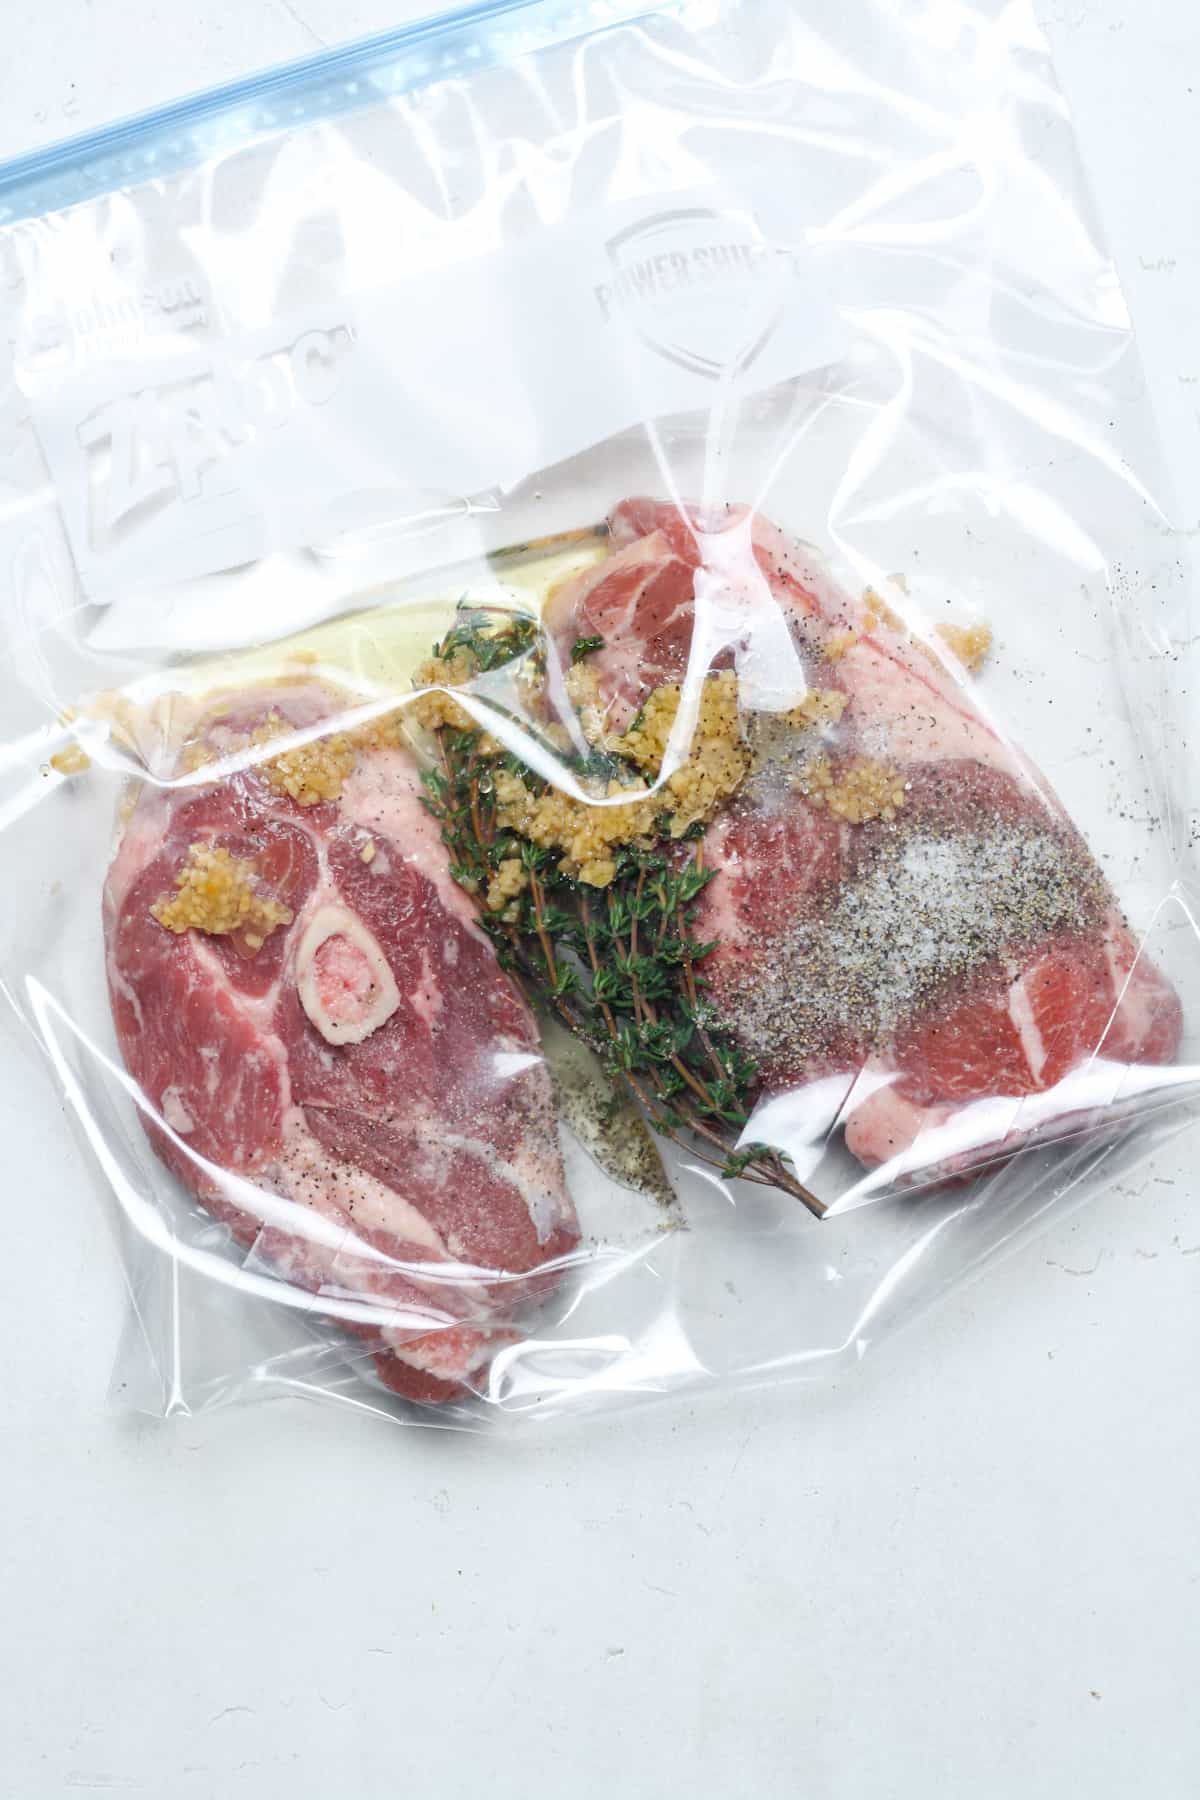 Meat inside a zippered bag